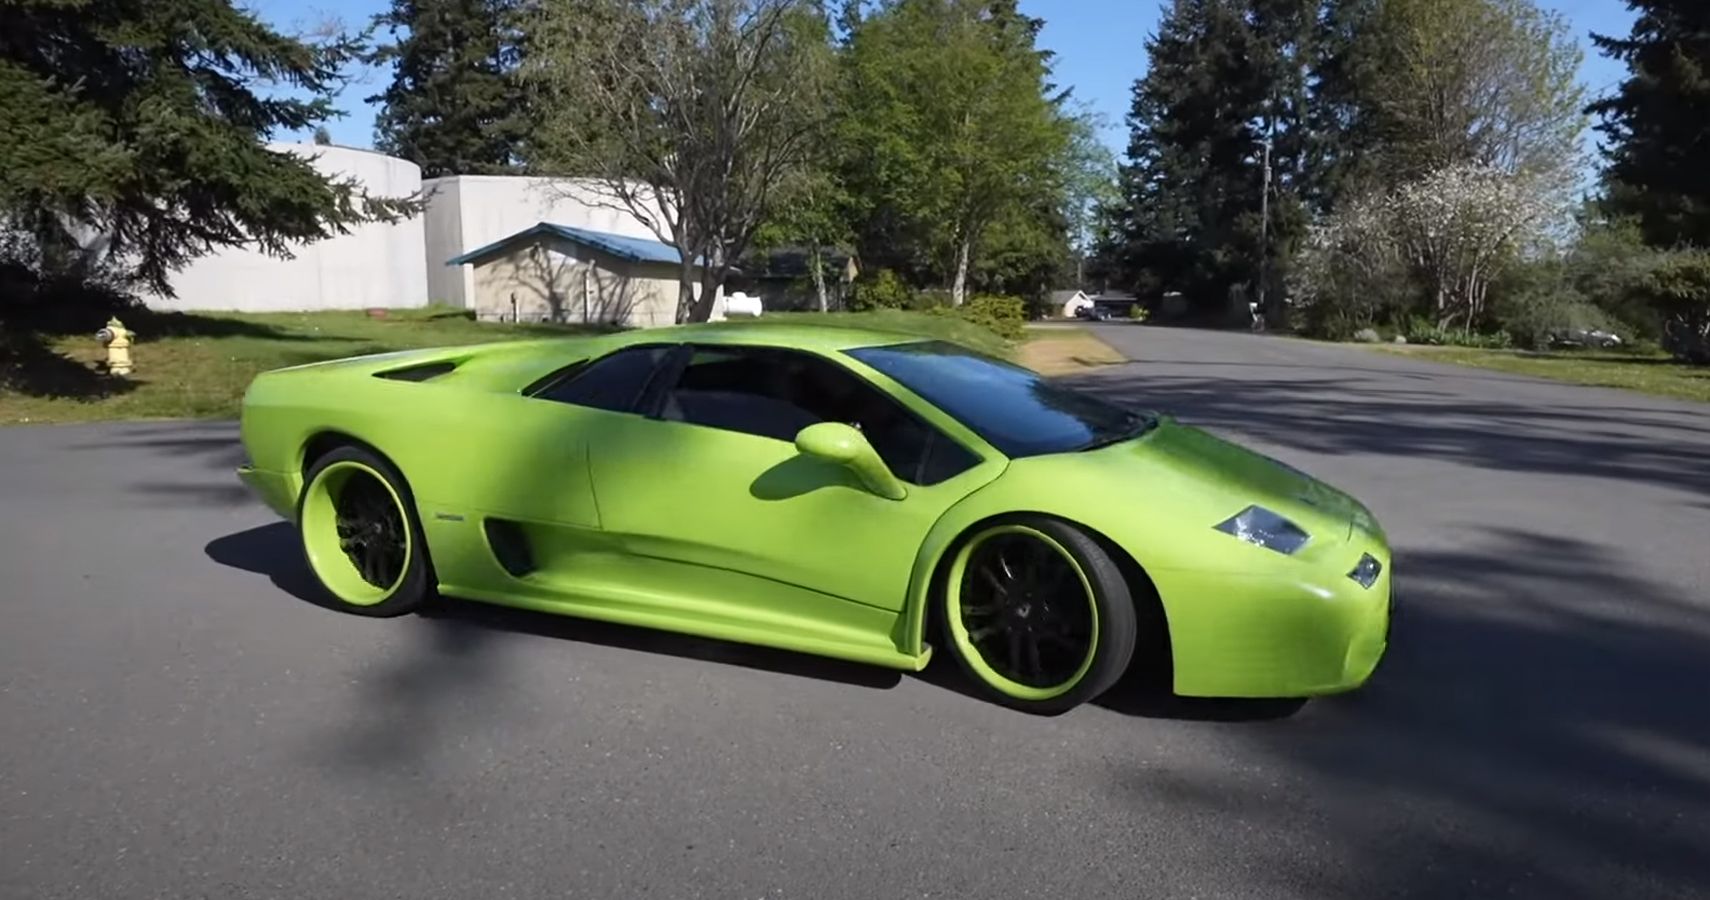 Fake lime green Lamborghini on the road in Seattle